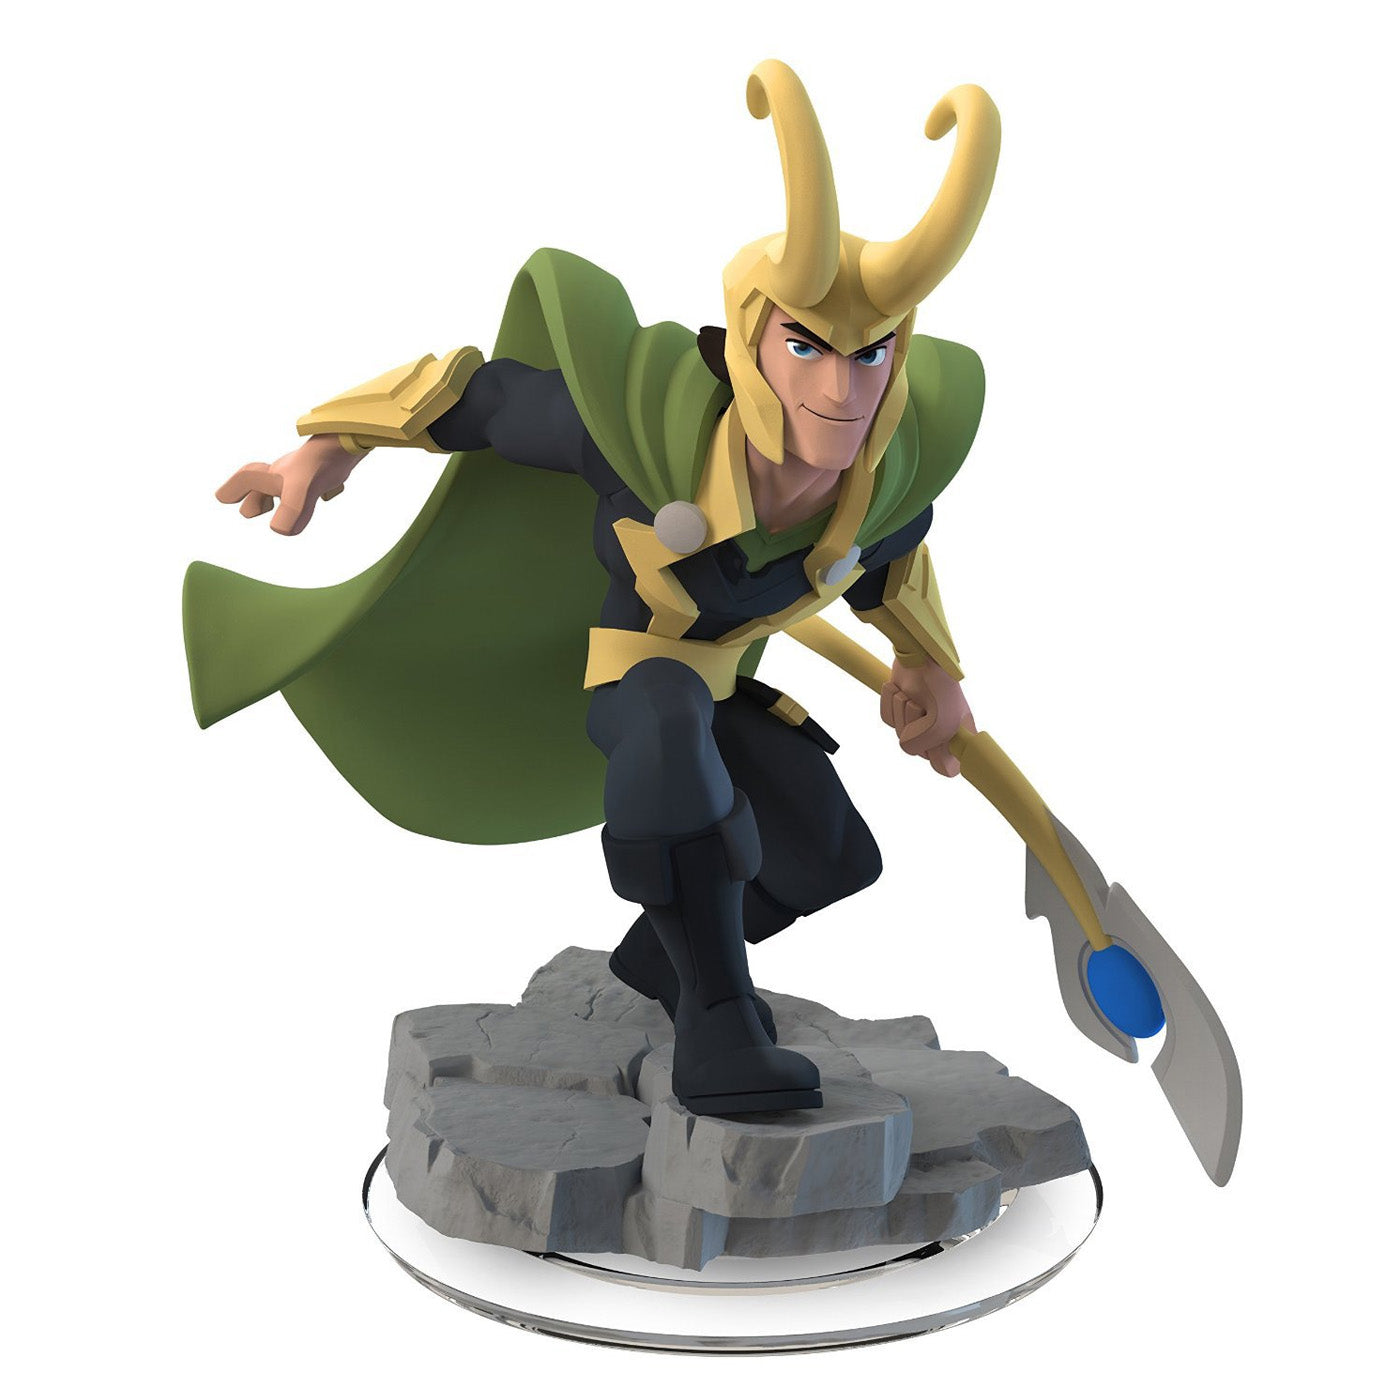 Disney Infinity 2.0 Character: Loki